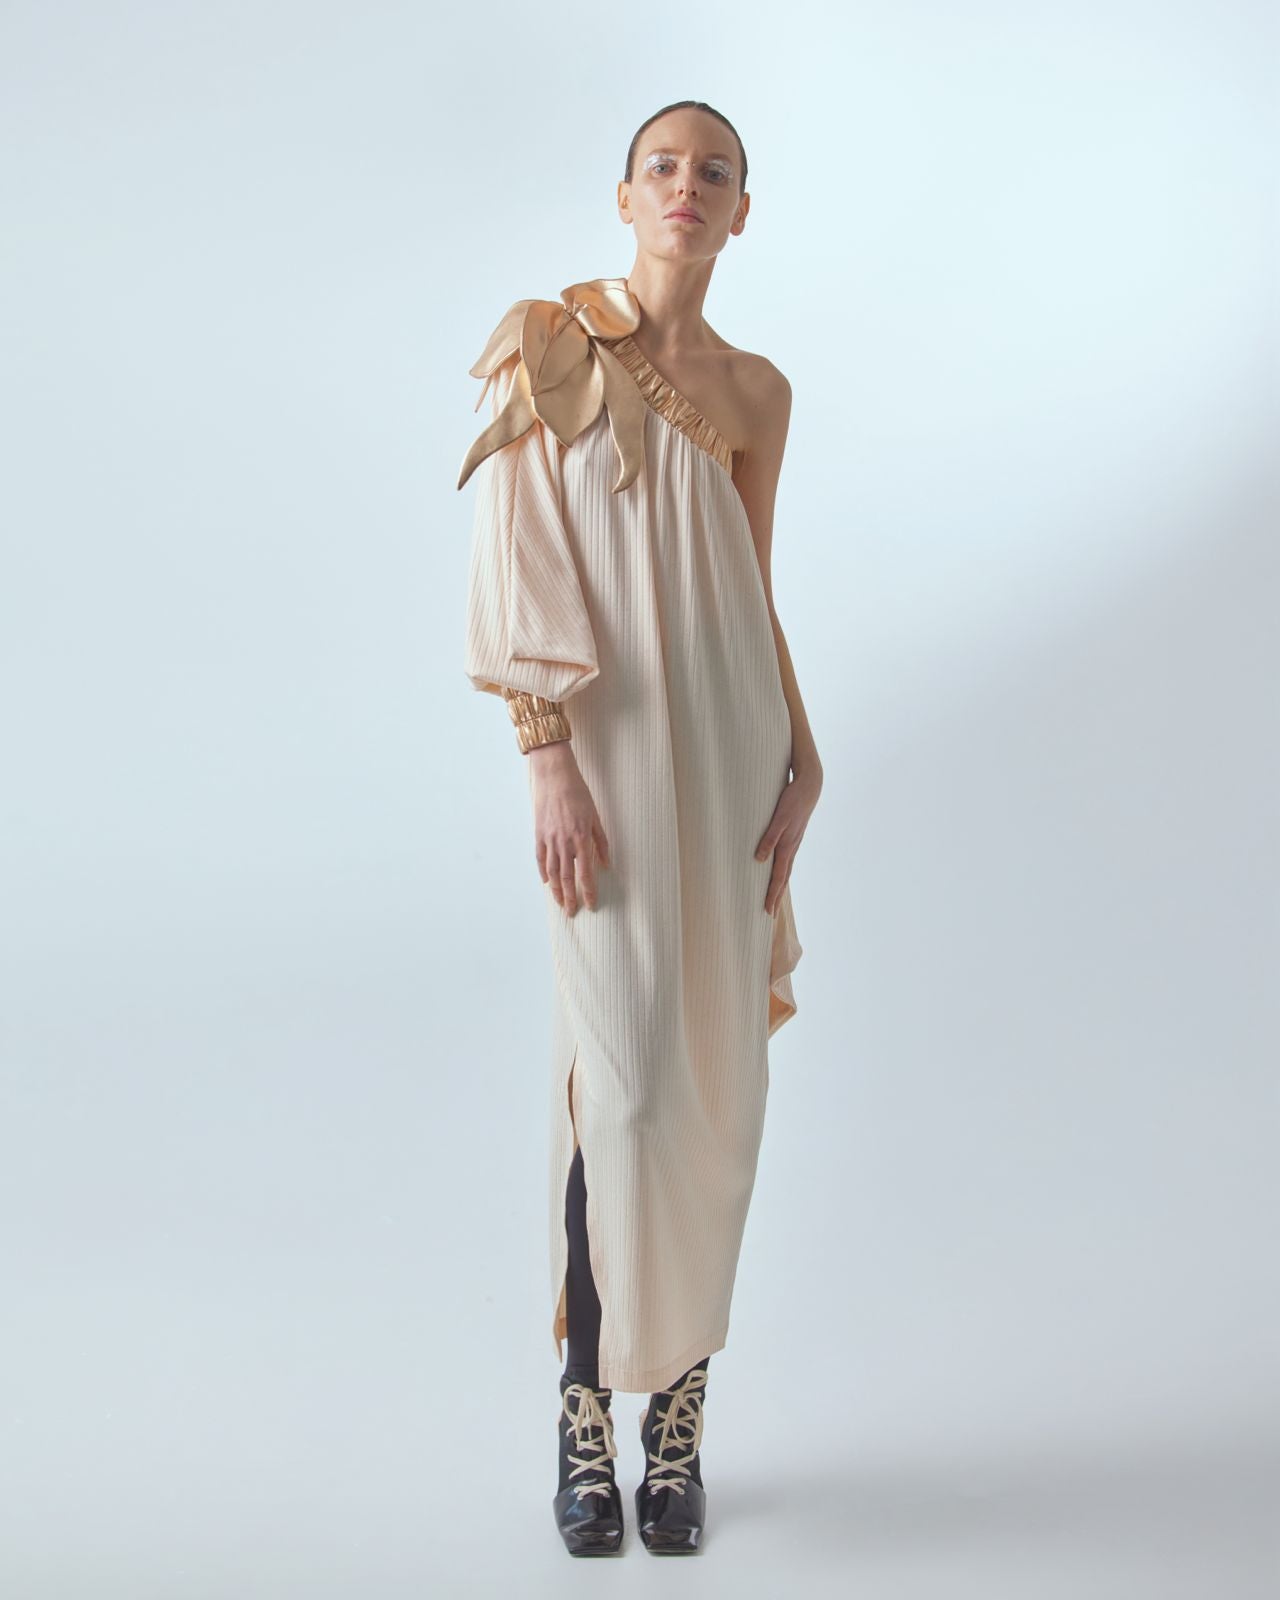 Luxury Elegance One-Sleeve Long Dress Rib Knit Peach